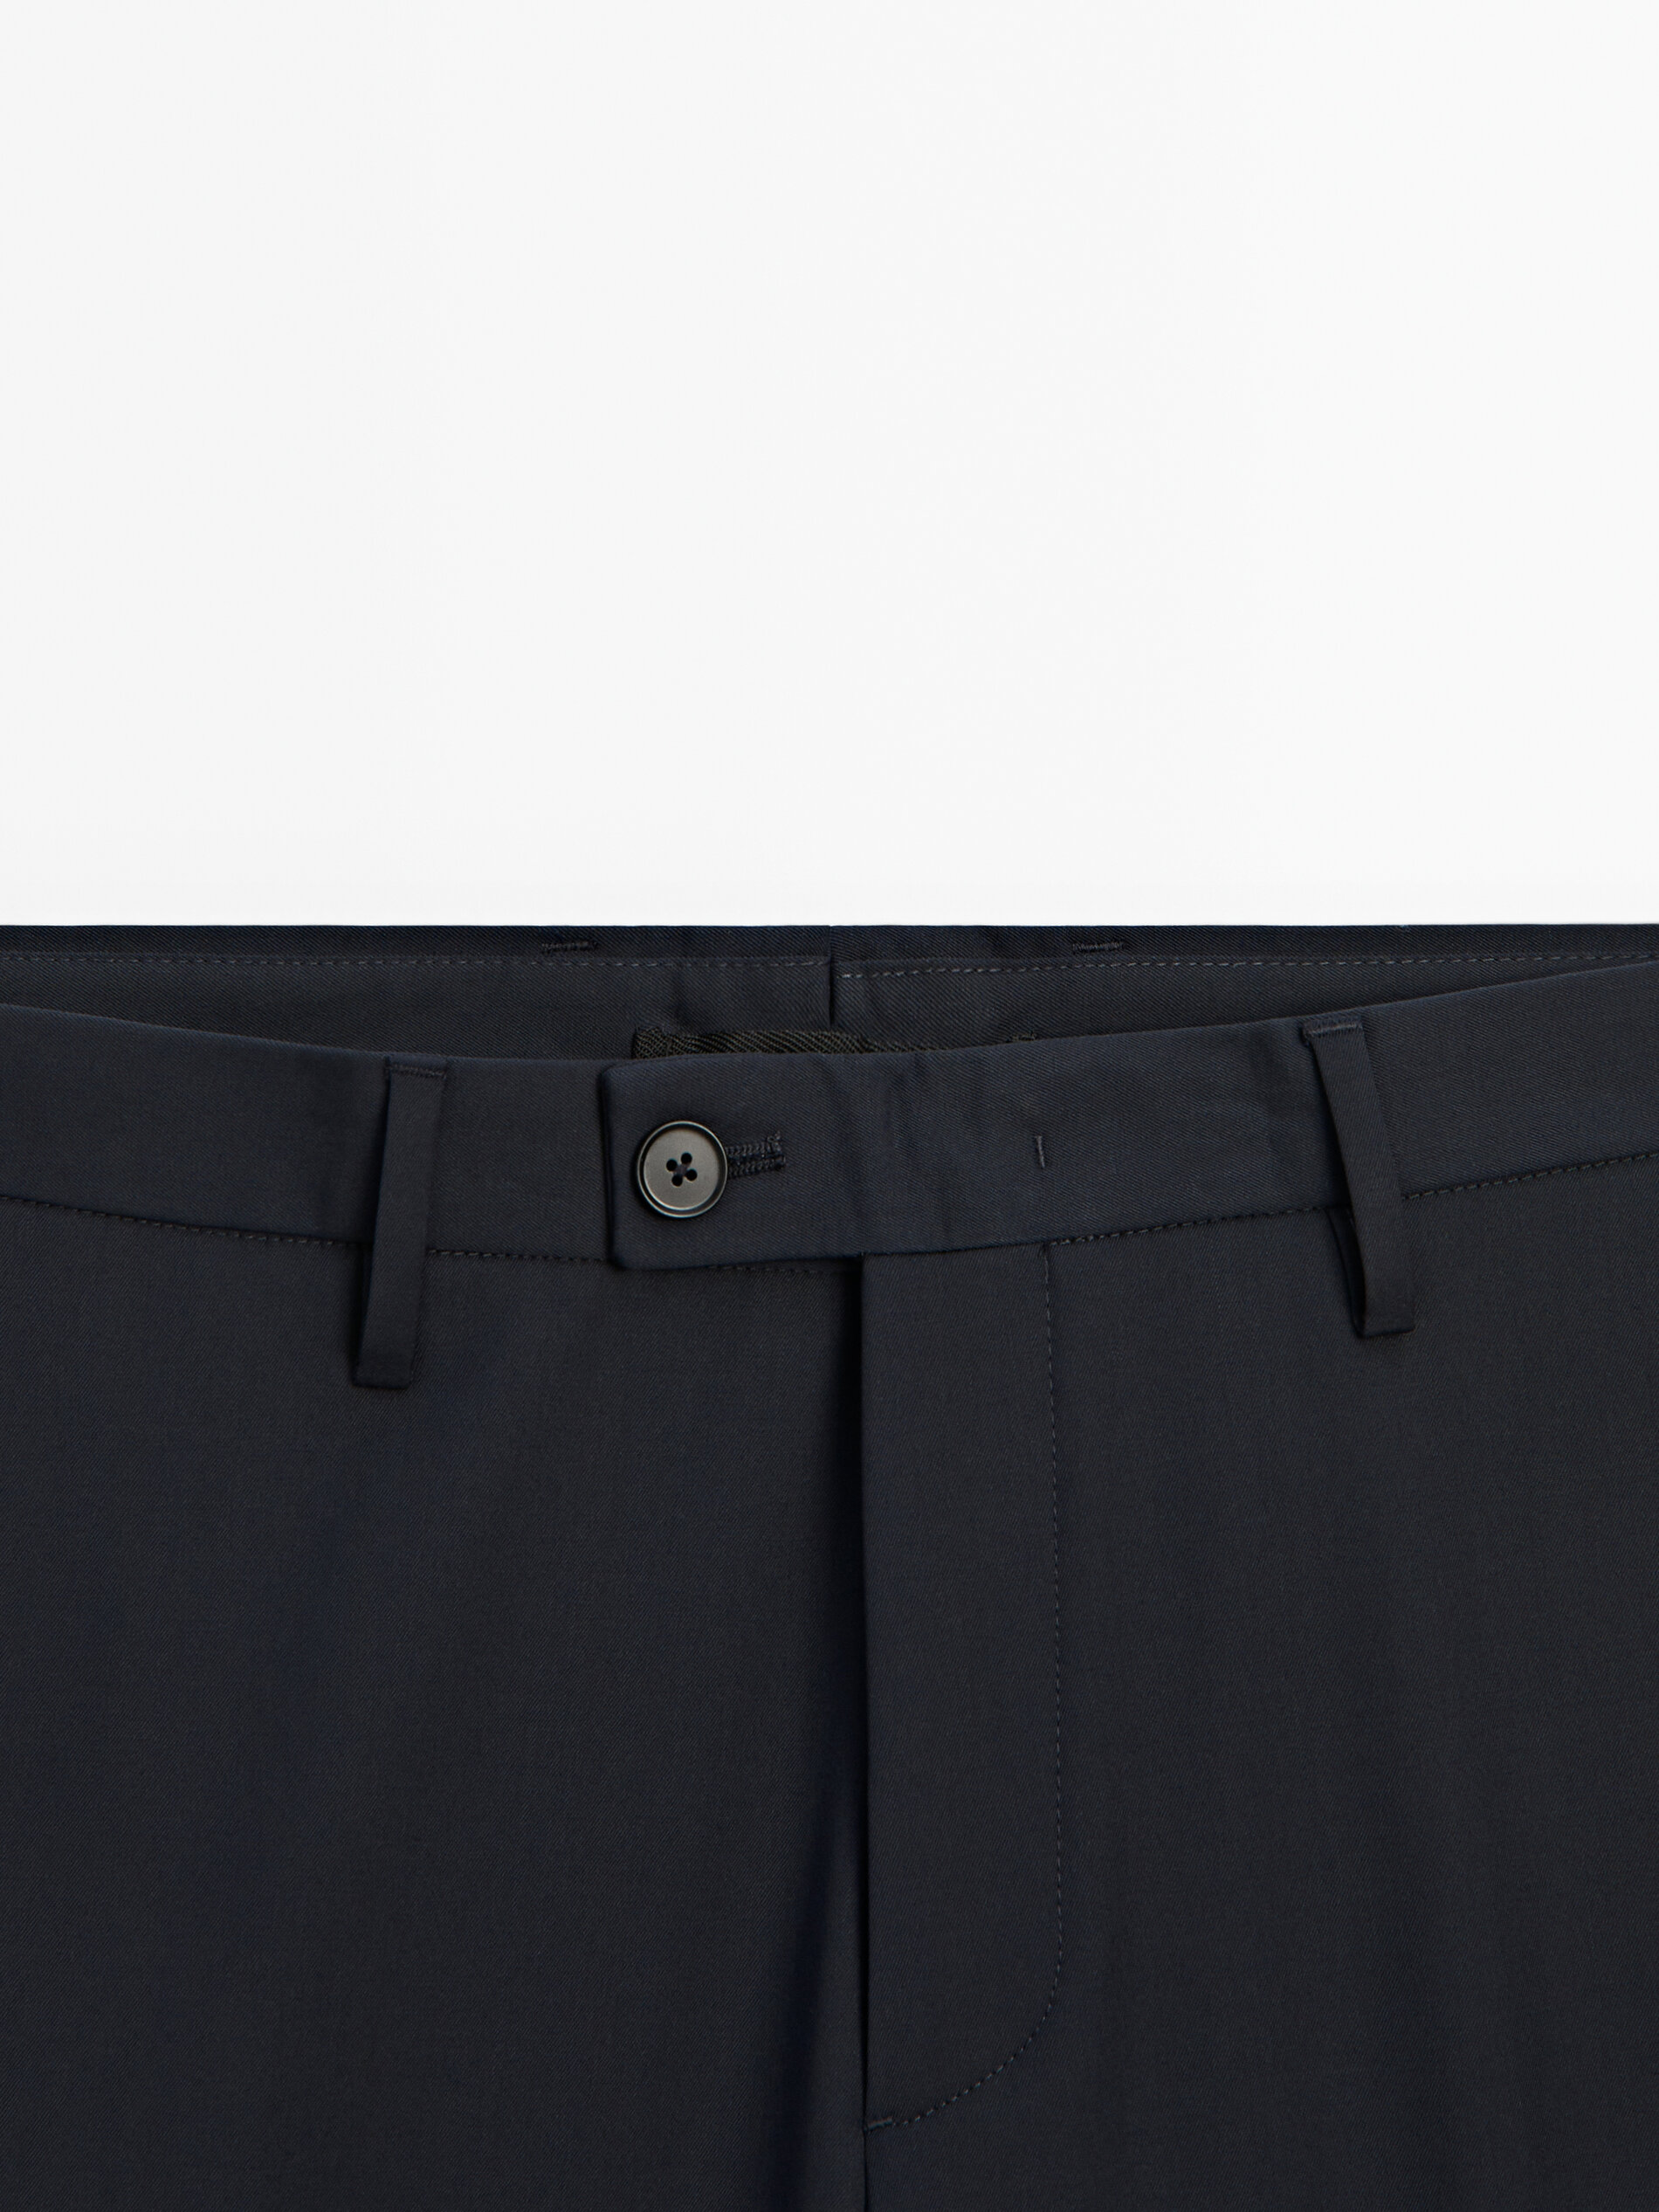 Plain trousers made of 100% wool Vitale Barberis Canonico Italy SKAY04